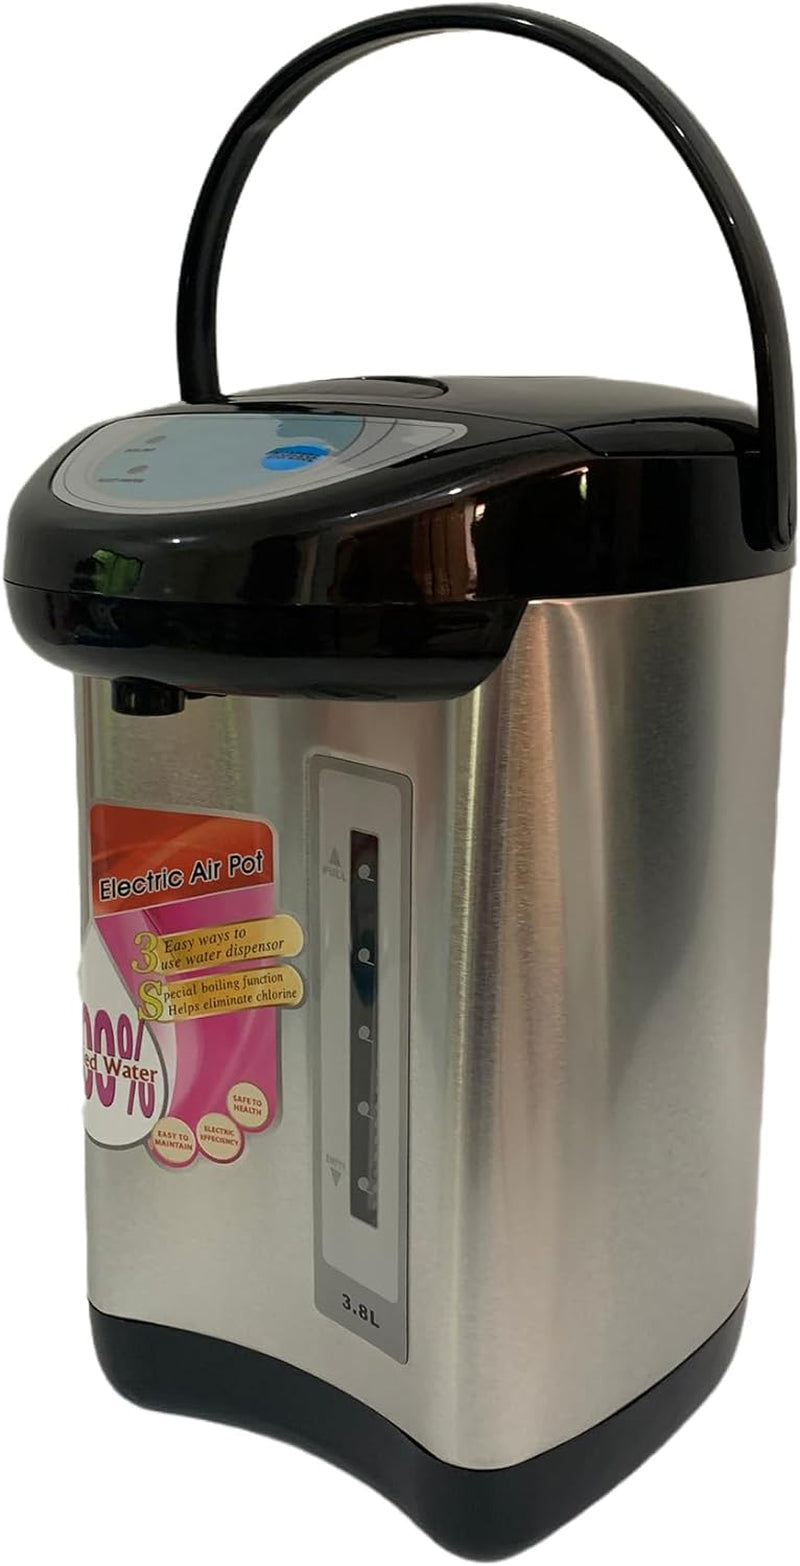 CHOLISM 3.8L Hot Water Dispenser, Micom Water Boiler and Warmer, Hot Beverage Dispenser, Hot Water Urn Pot Insulated Stainless Steel, Countertop Water Heater